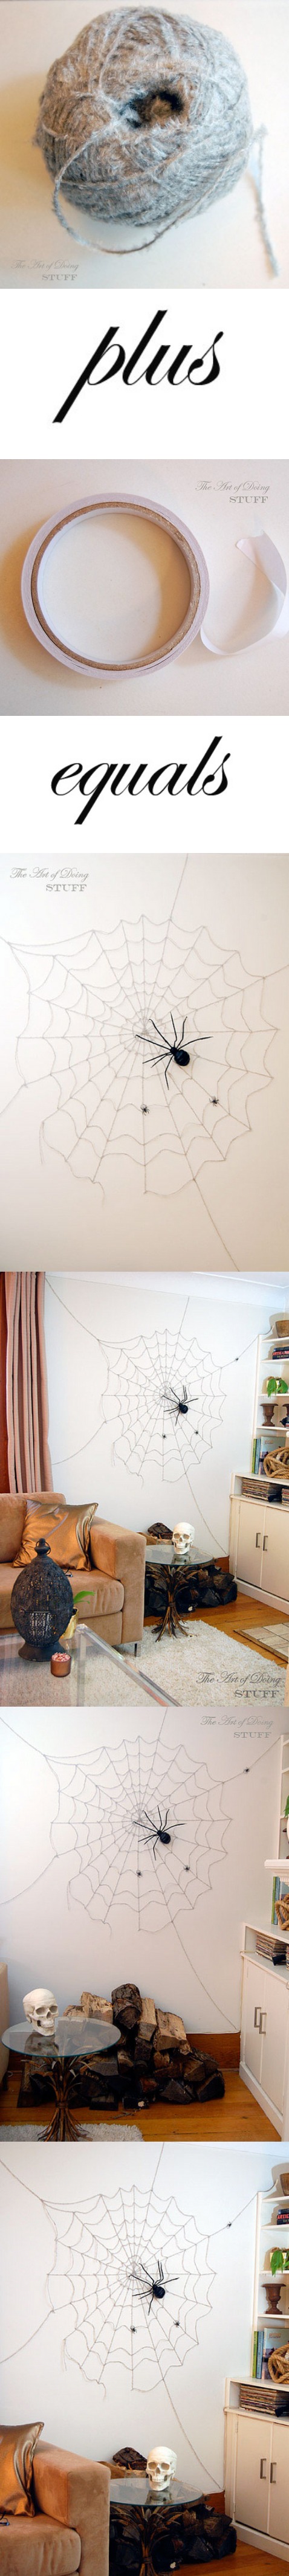 4. Wall Spiderweb